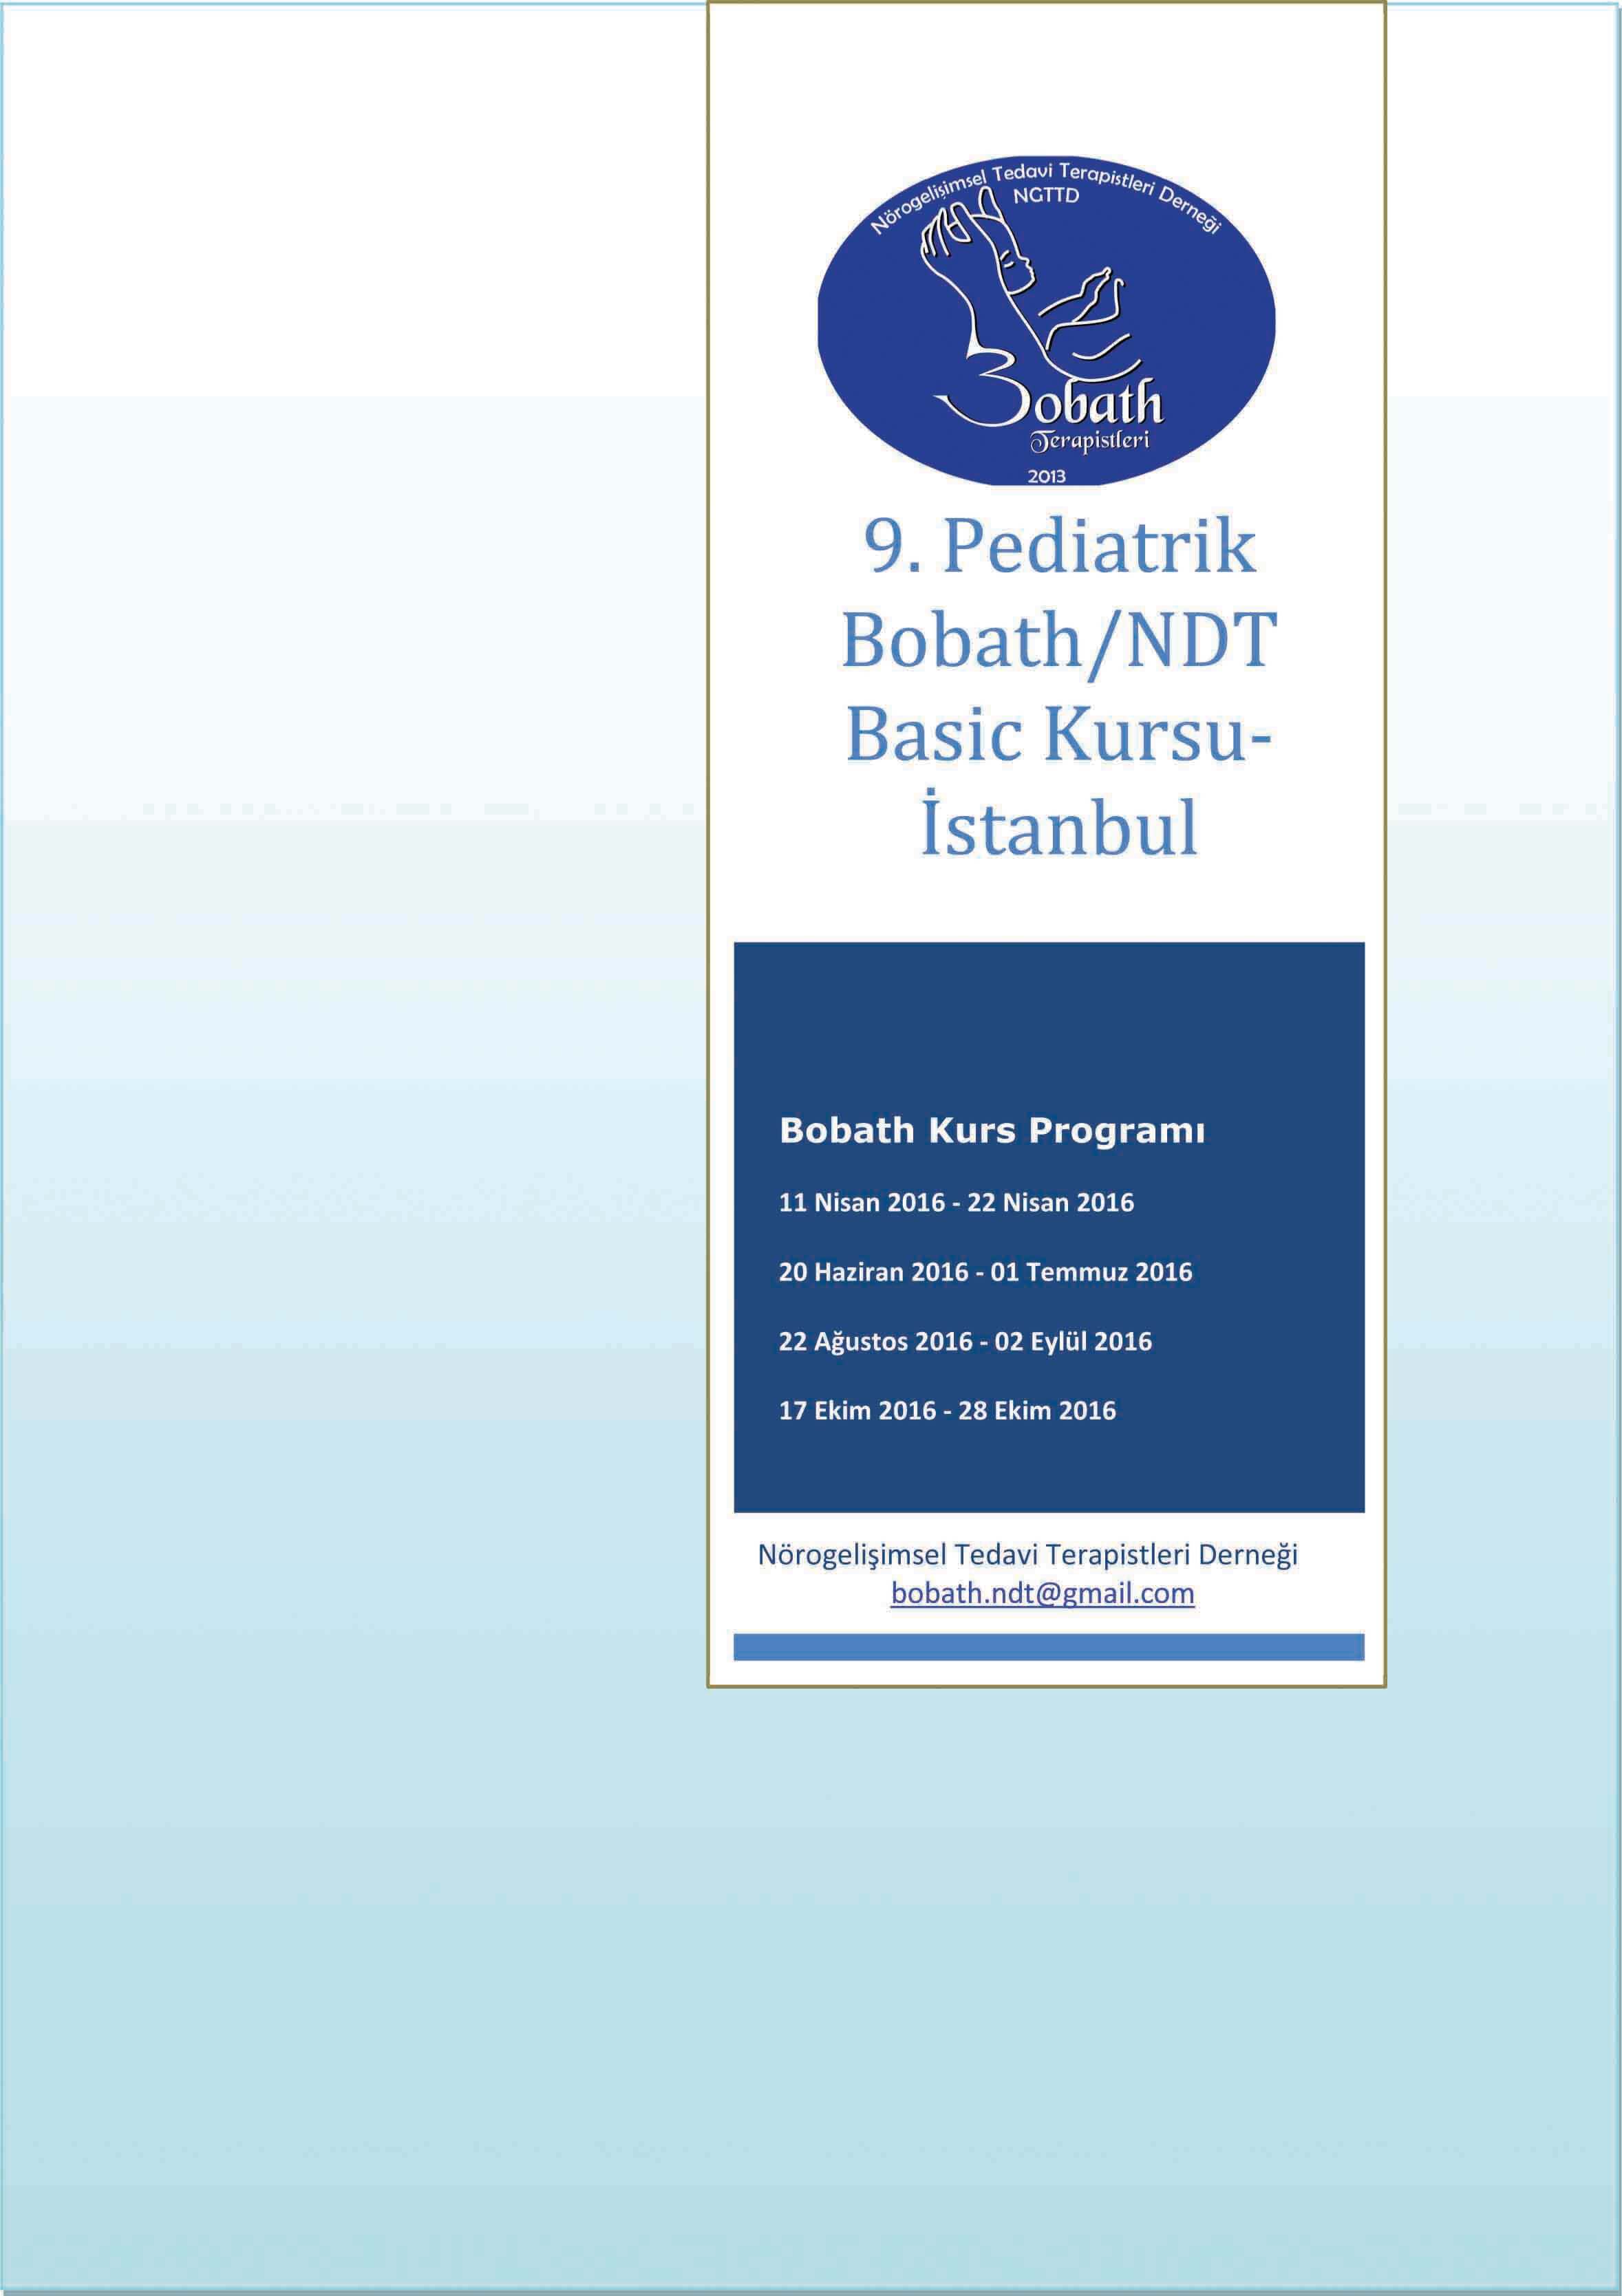 9. Pediatrik Bobath/NDT Basic Kursu, İstanbul